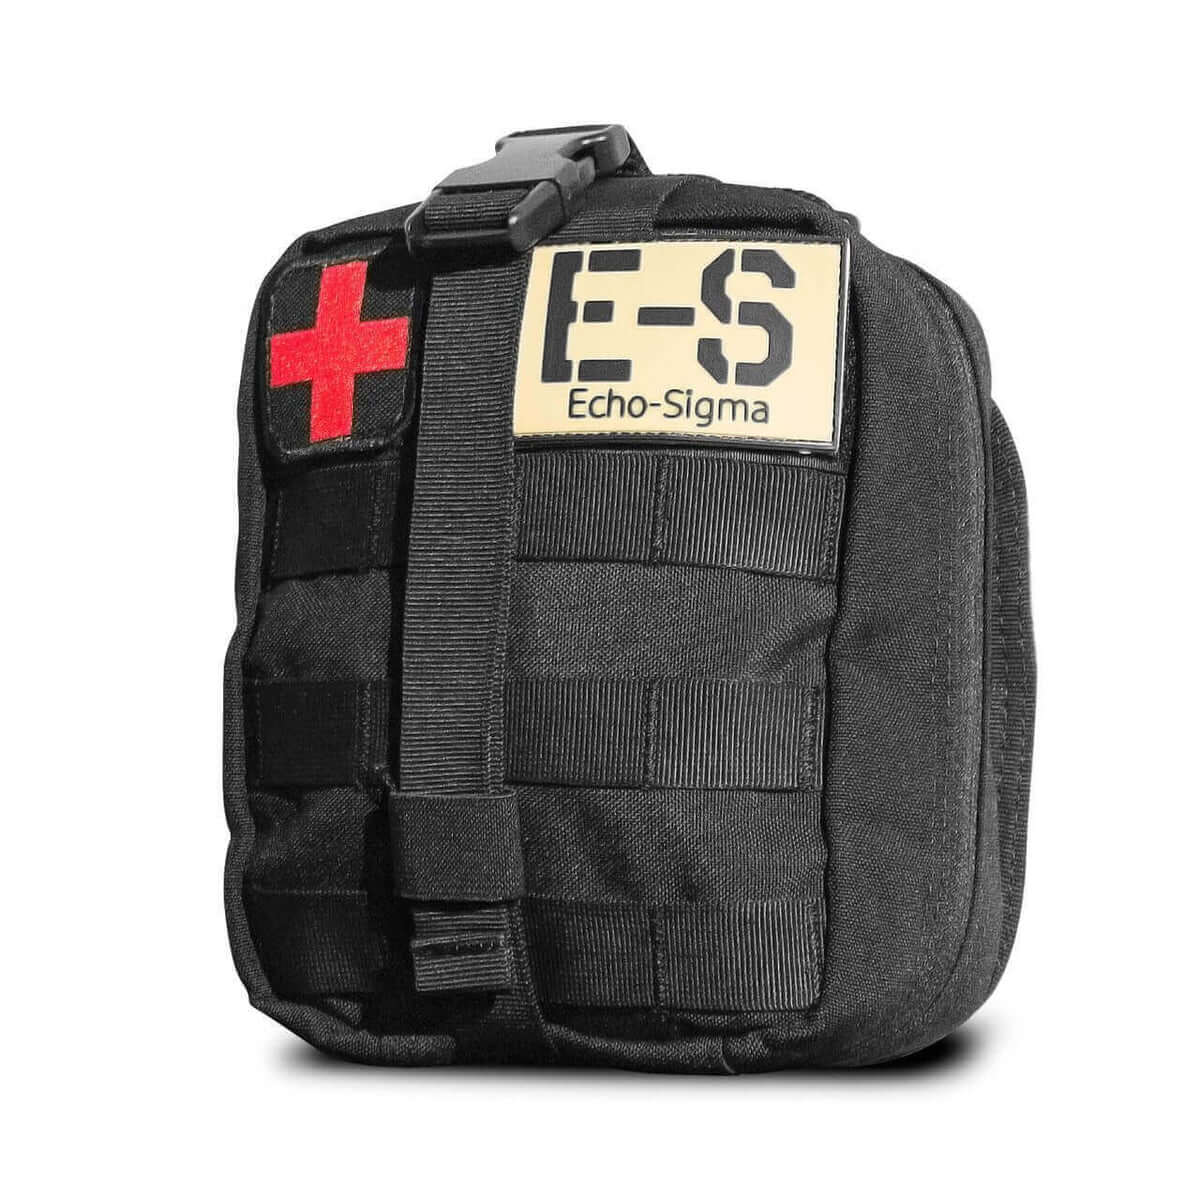 Ultimate Echo-Sigma Trauma Kit